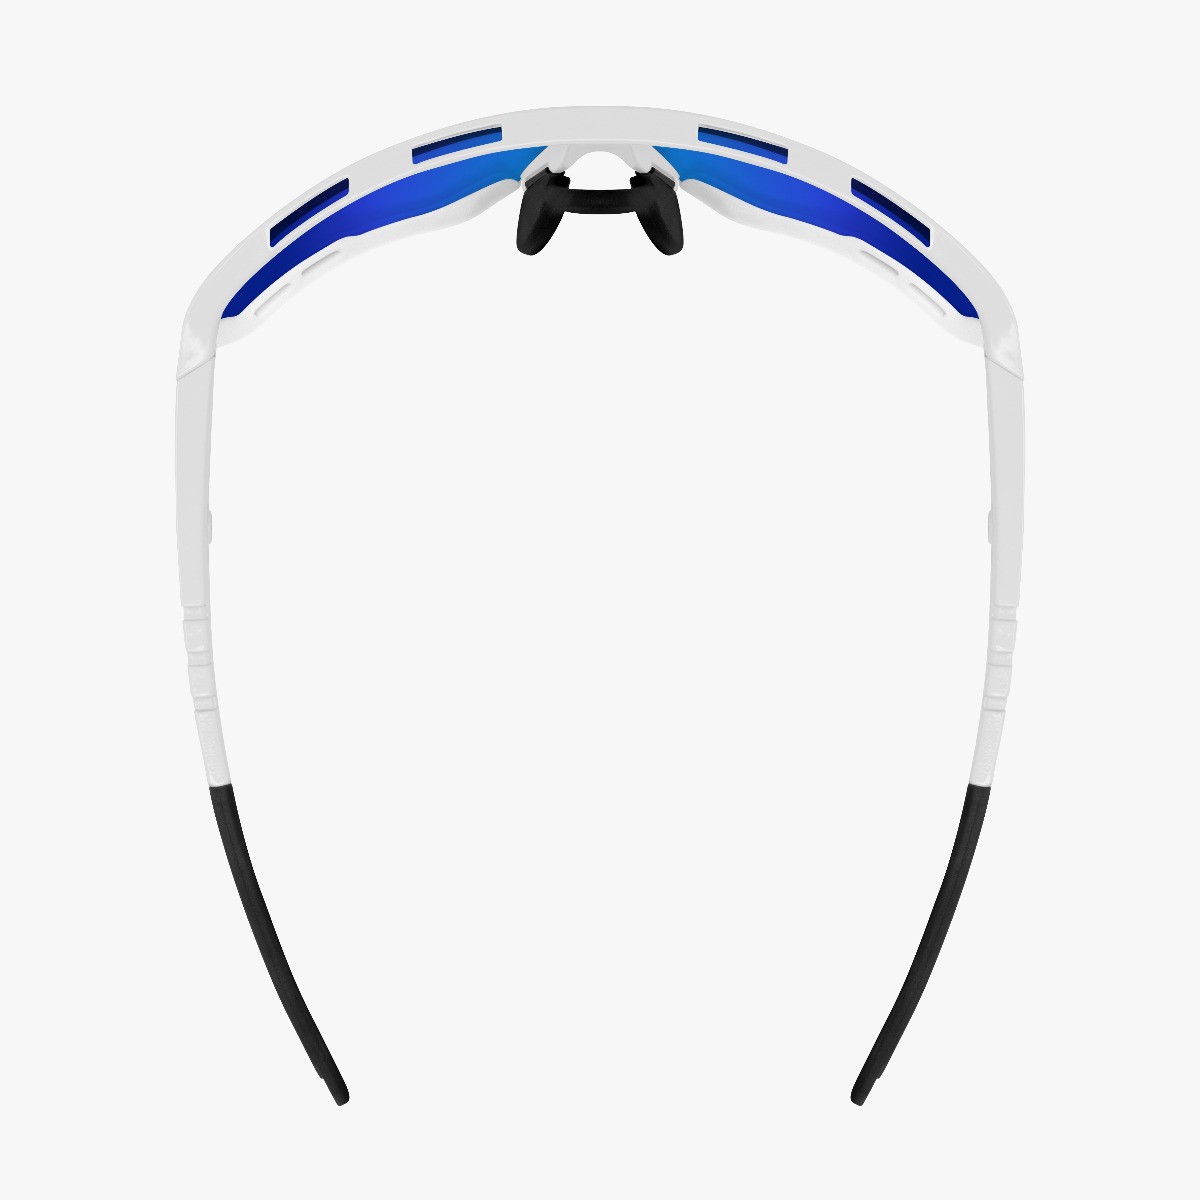 Aerocomfort cycling sunglasses scnxt photochromic white frame blue lenses EY19130402
